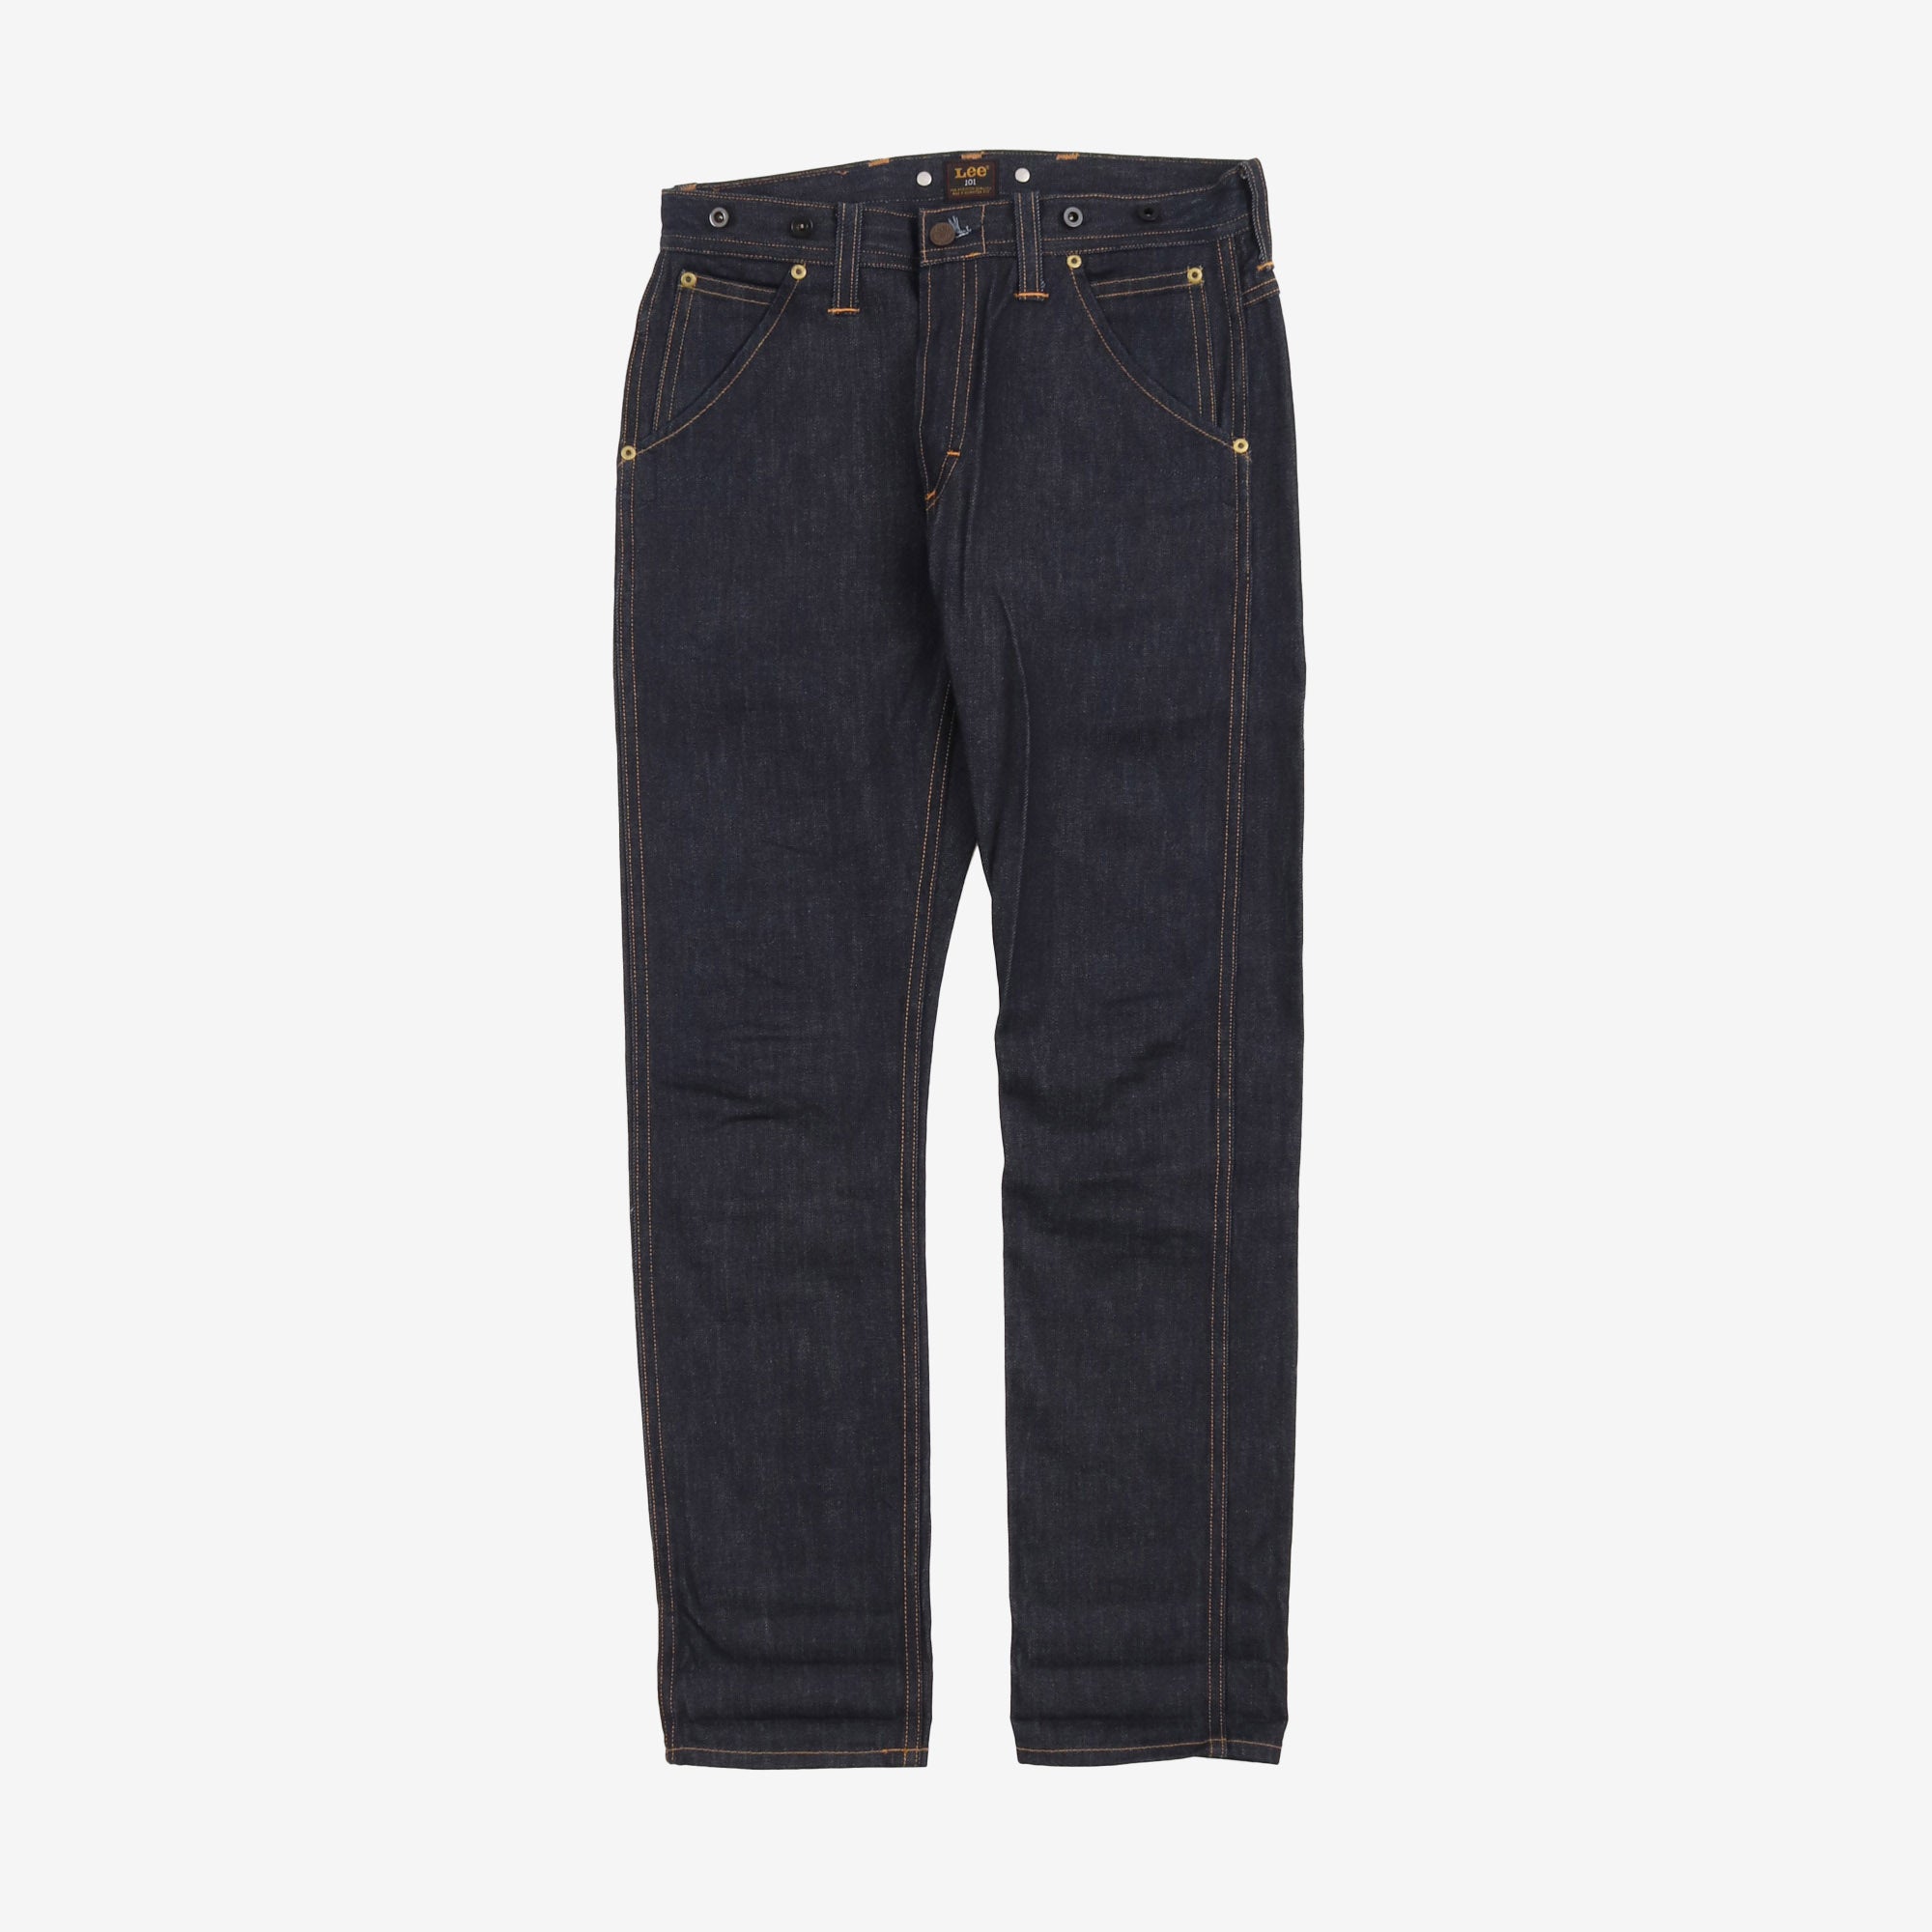 101 13.75oz Selvedge Jeans